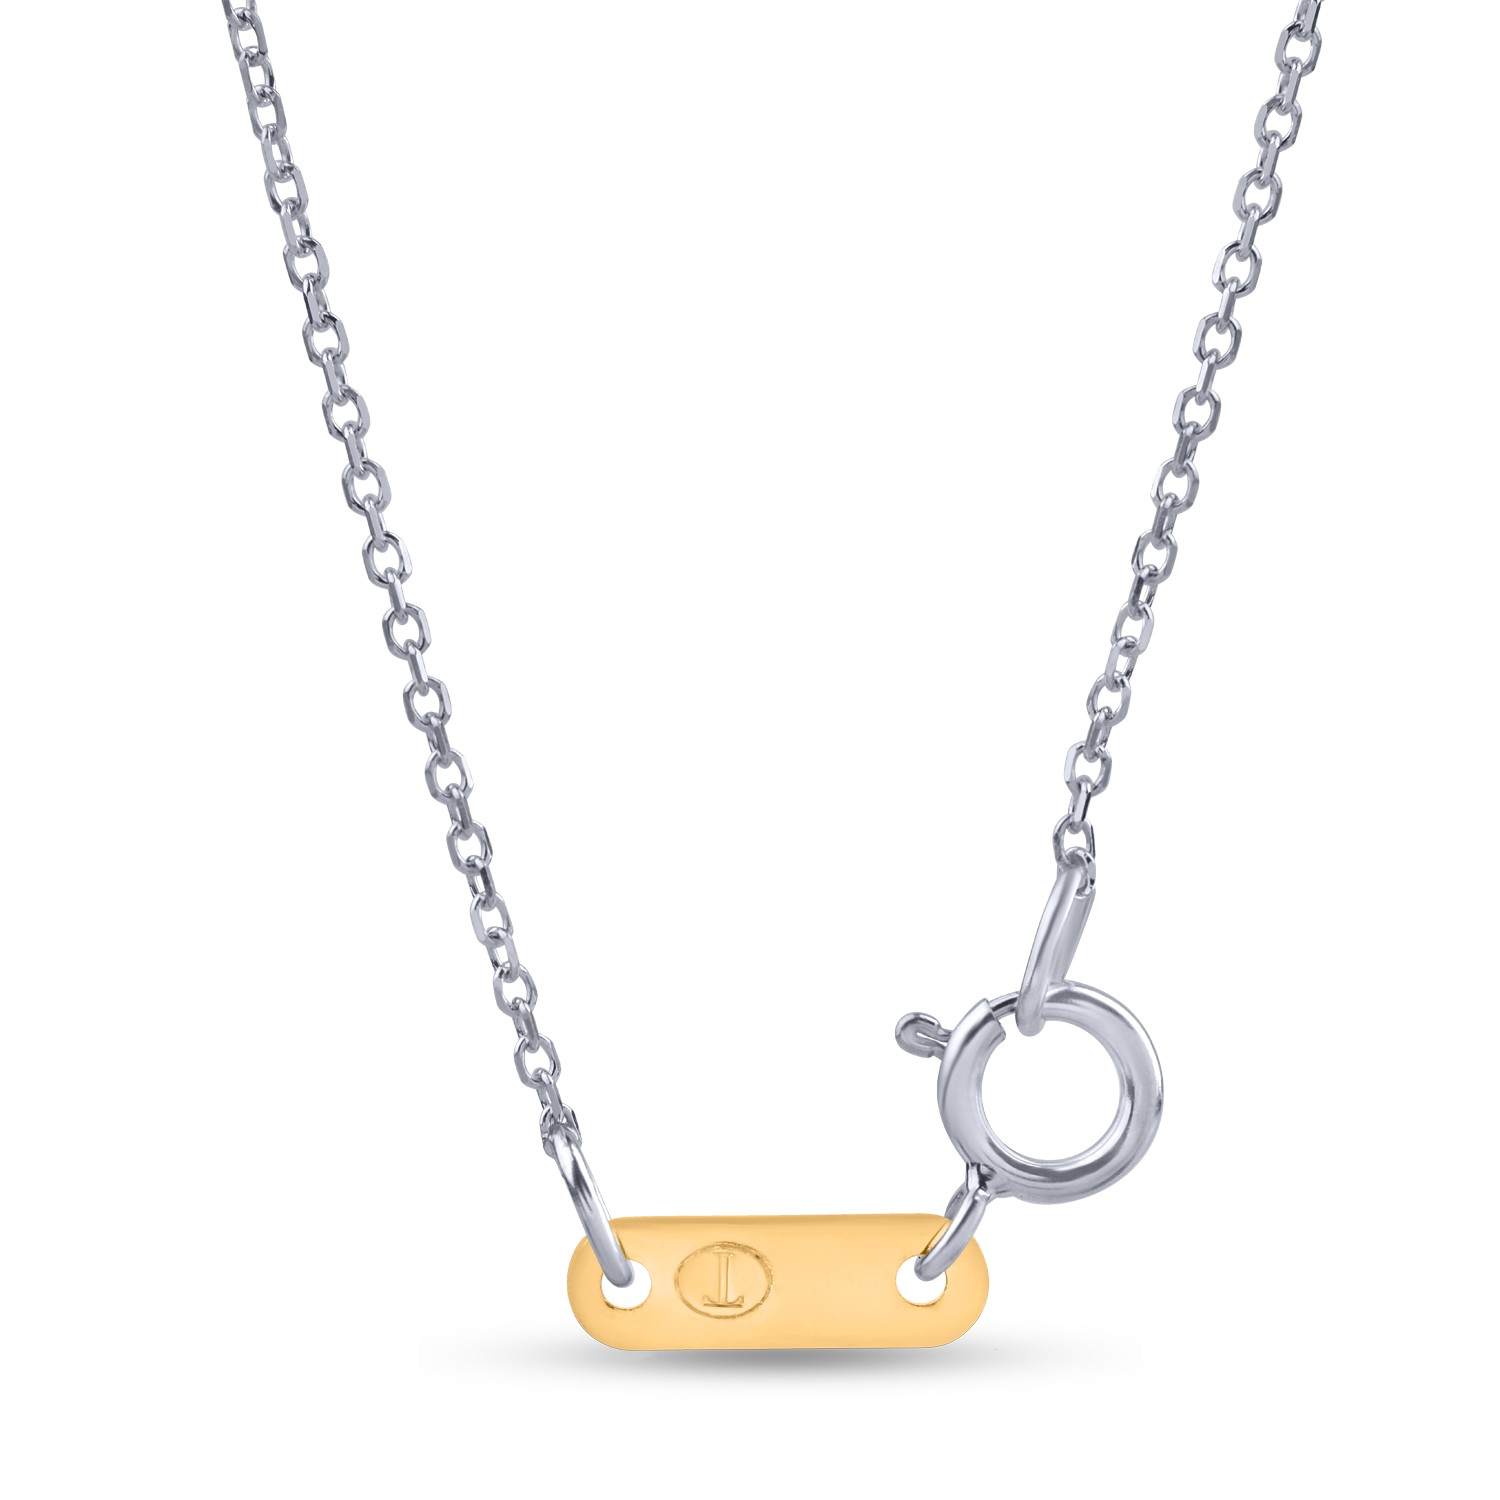 White-yellow gold infinite pendant necklace